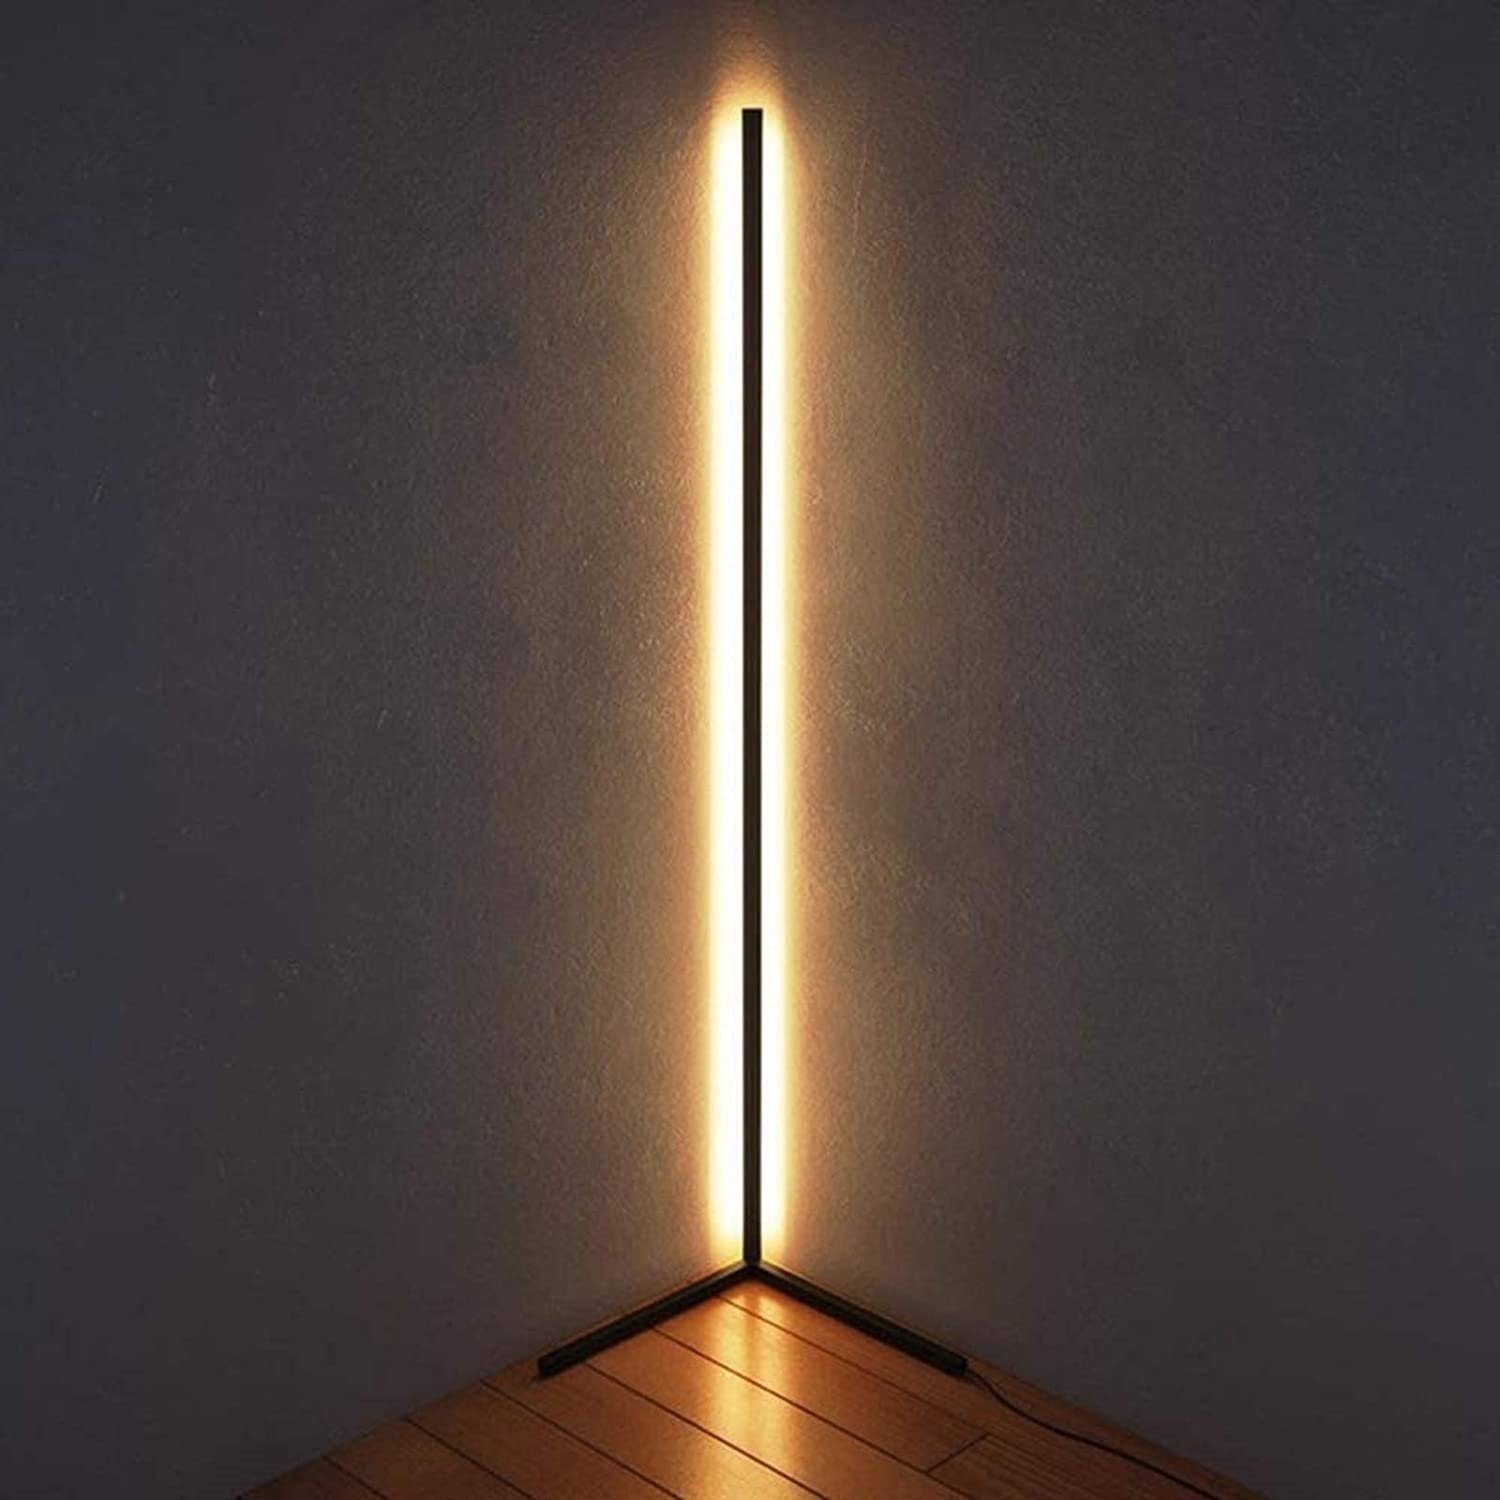 Jiuanzm LED Stehlampe Ecklampe, LED fest integriert, warmweiß (3500k), indirekts LED Lampe, 3500 k Warmweiß schwarz